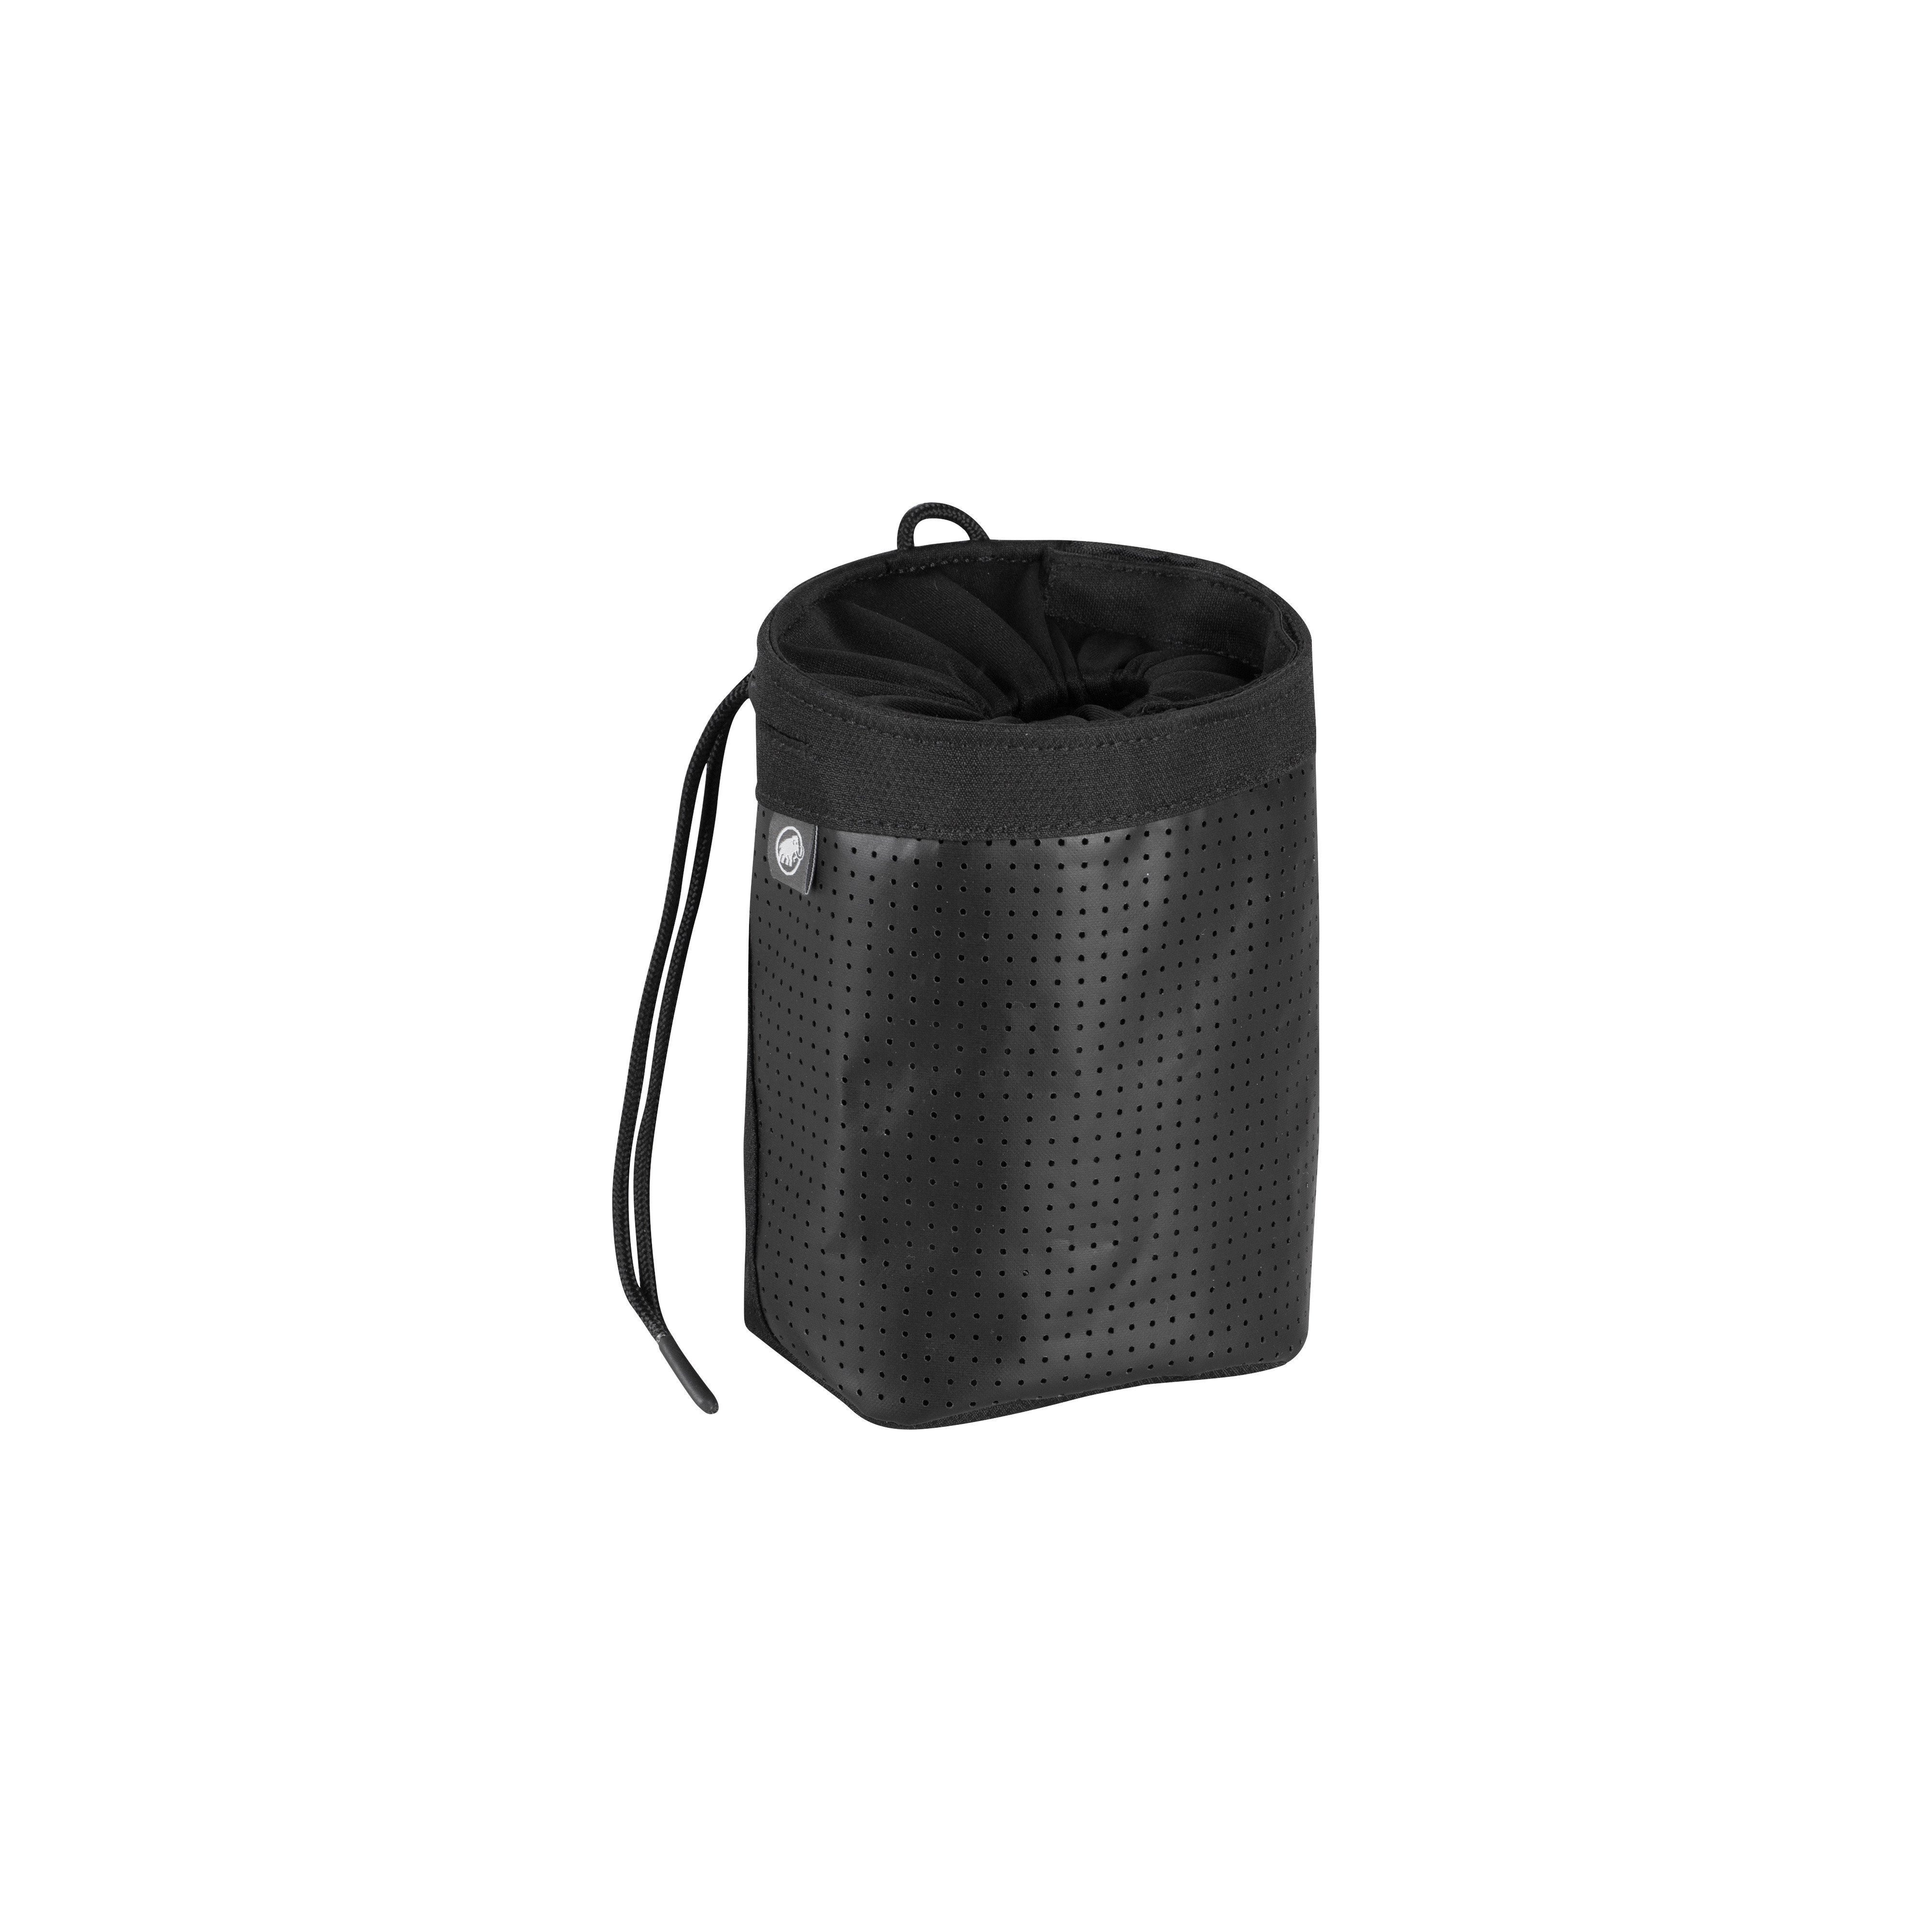 Stitch Chalk Bag - black, one size product image